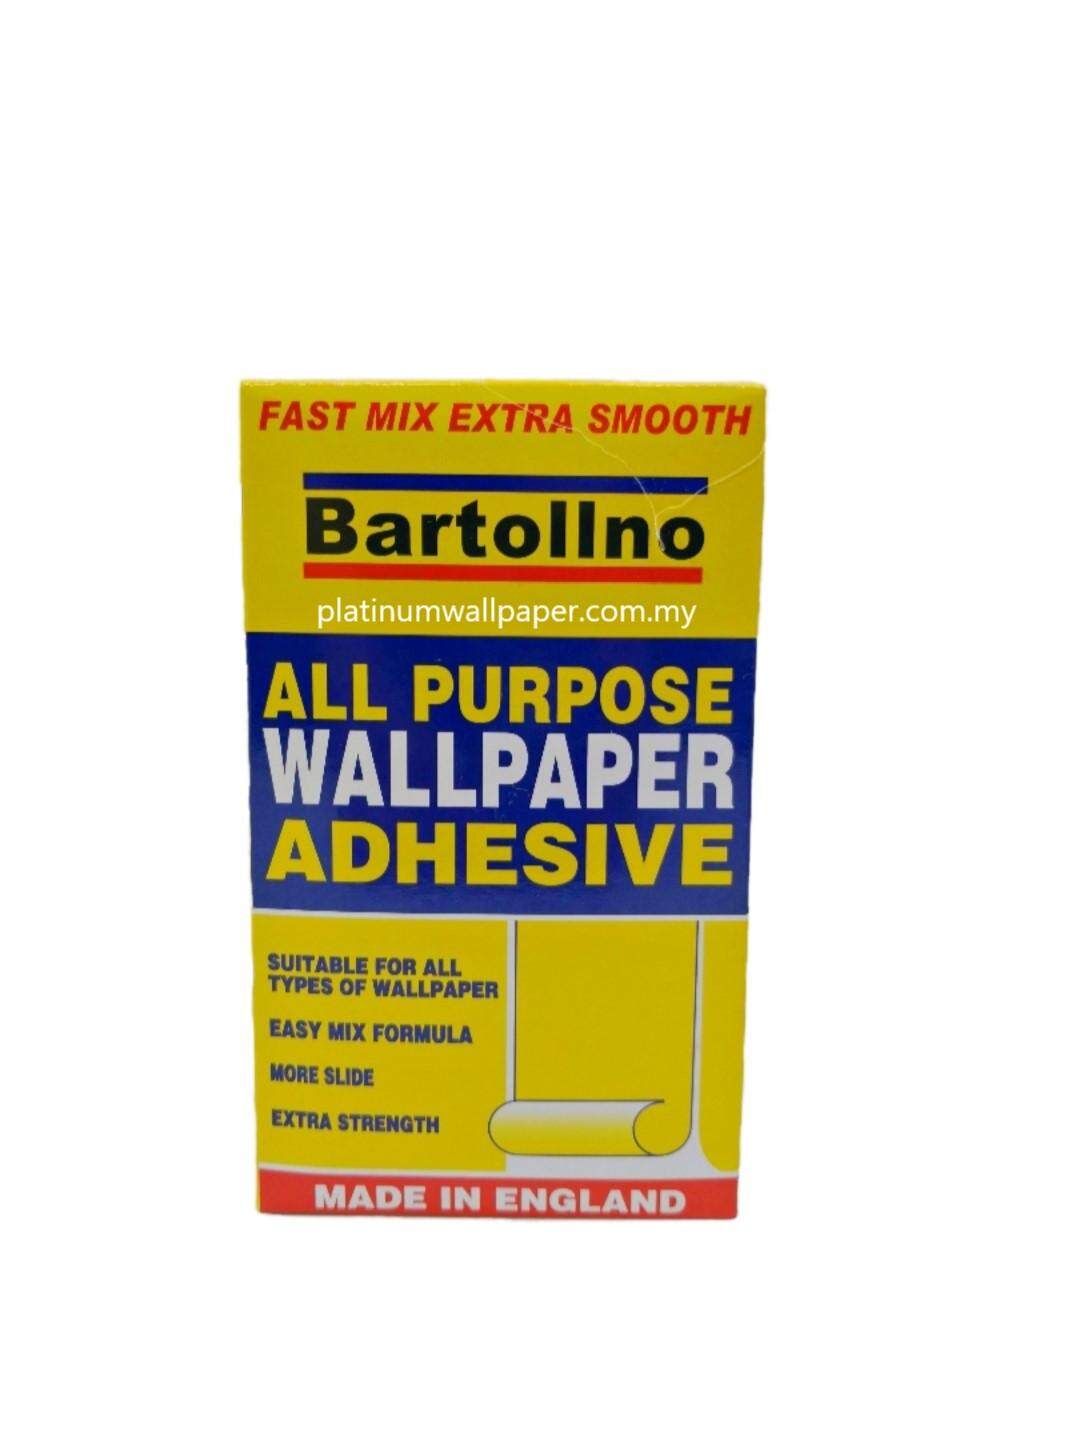 Bartollno Premium Wallpaper Adhesive Glue Powder (200g) | Lazada